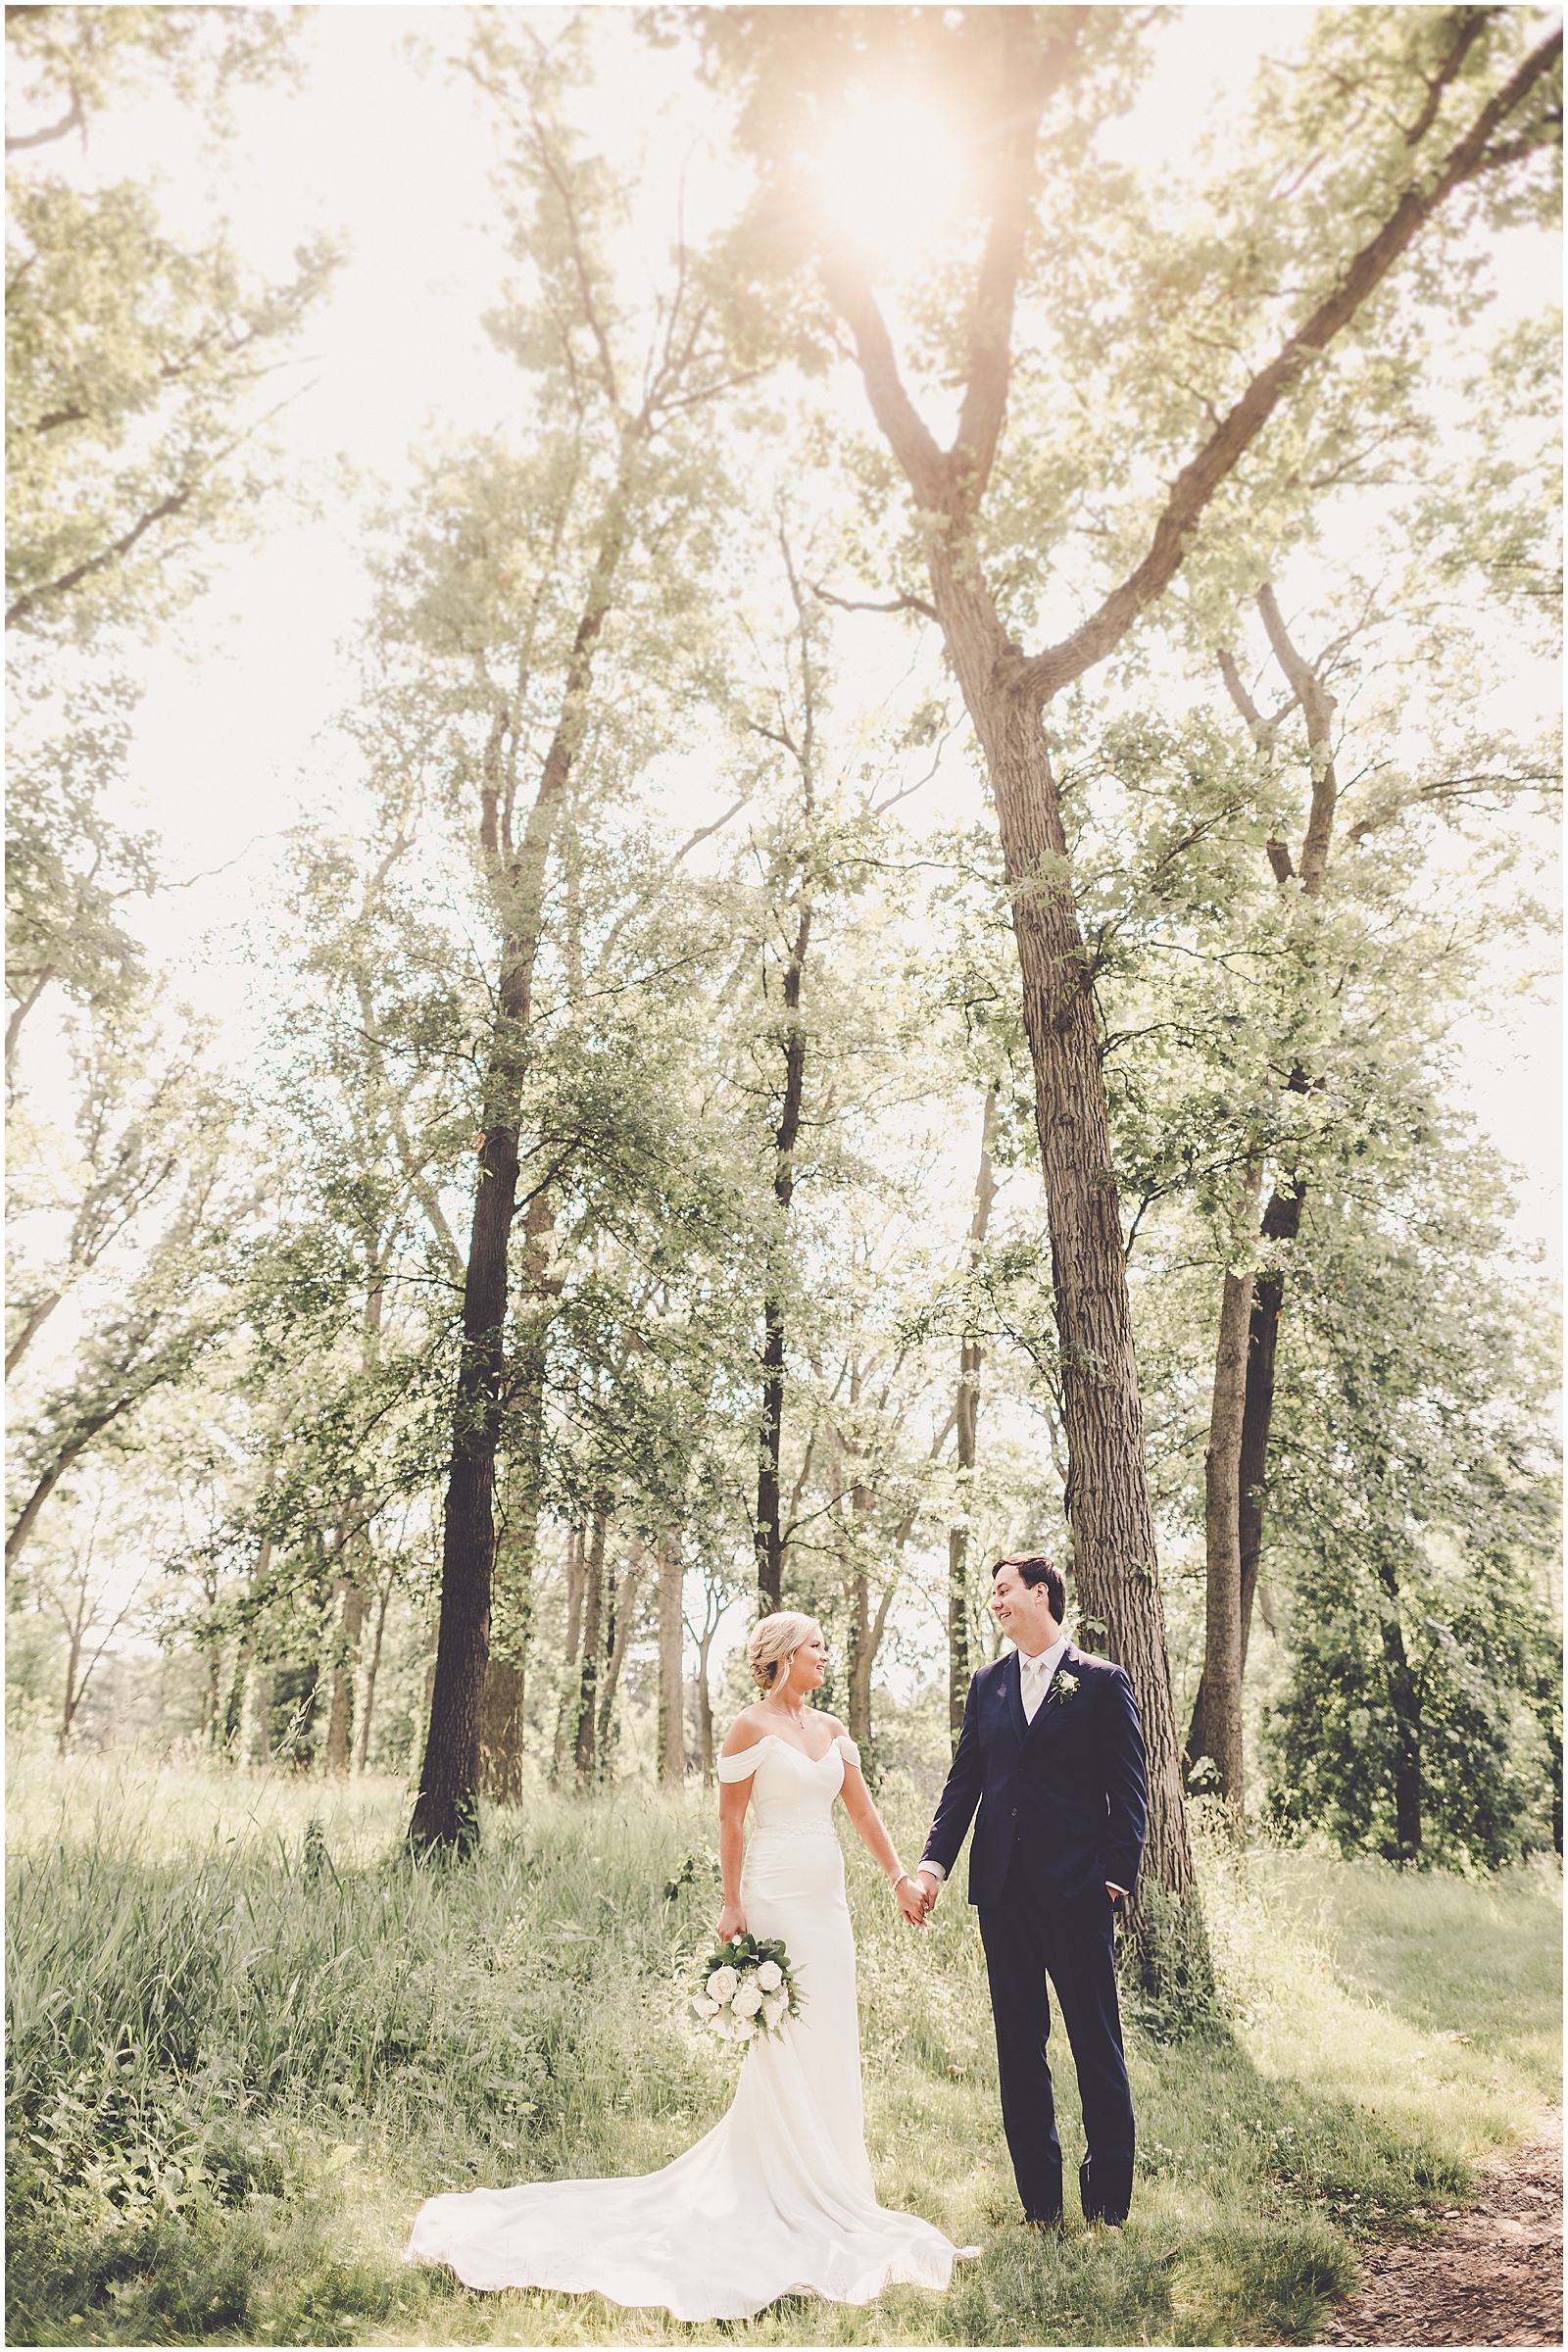 Tracy and Dan's summer Morton Arboretum wedding day with Chicagoland wedding photographer Kara Evans Photographer.